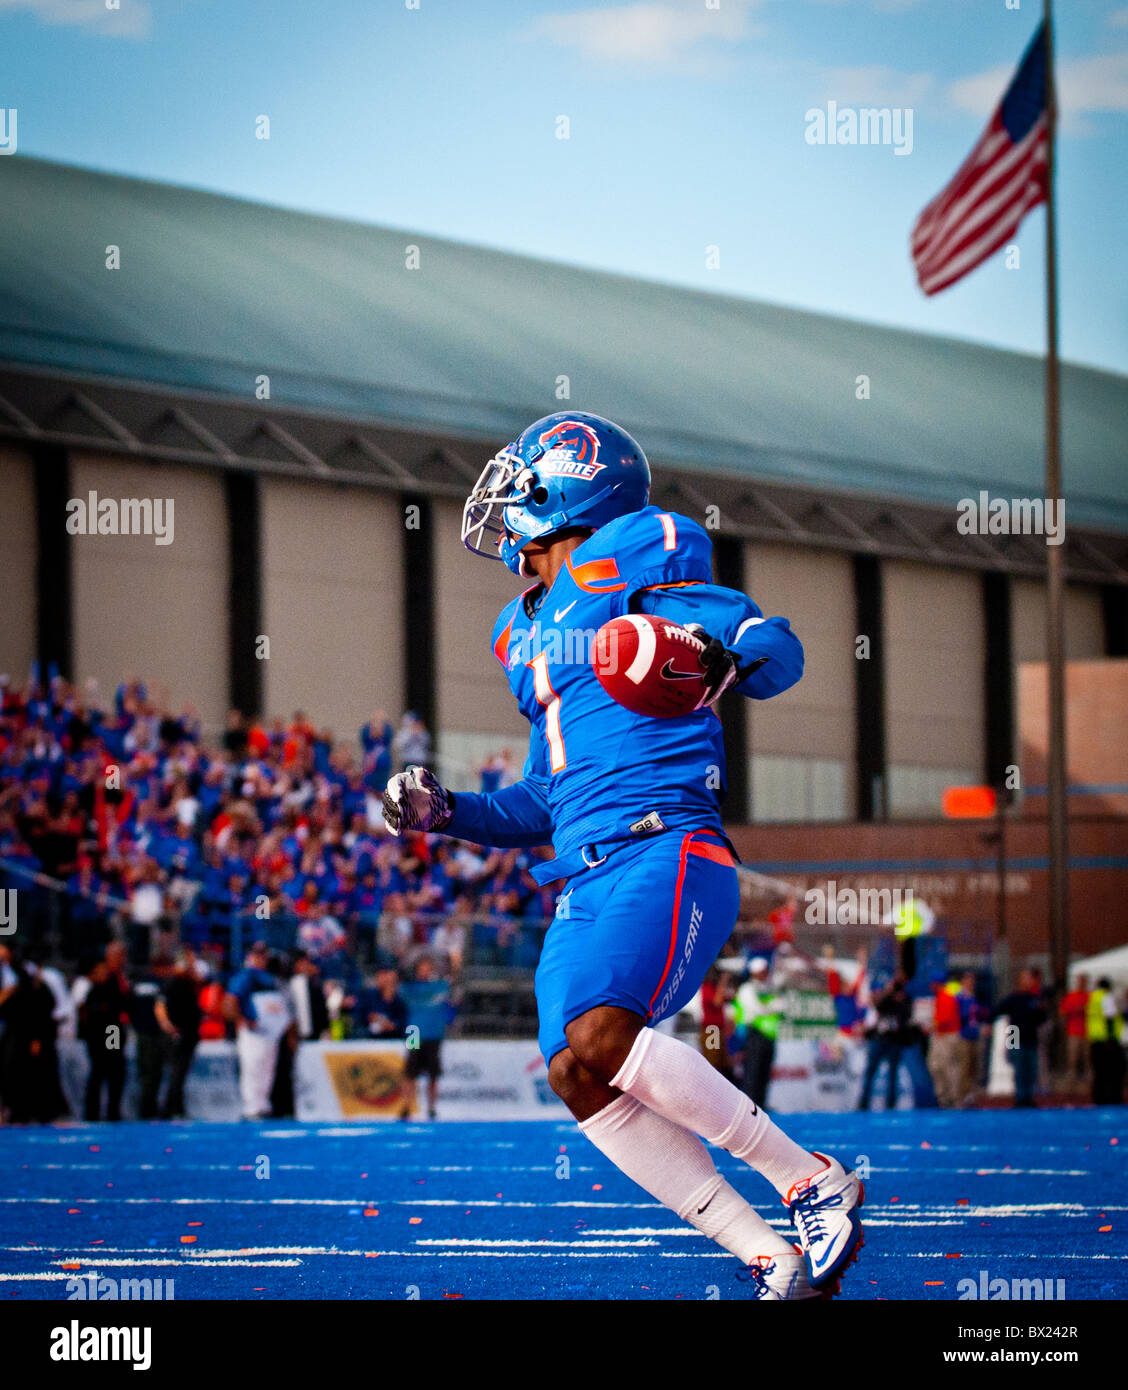 USA, Idaho, Boise, Boise State University football player Titus Young scoring a touchdown. Stock Photo